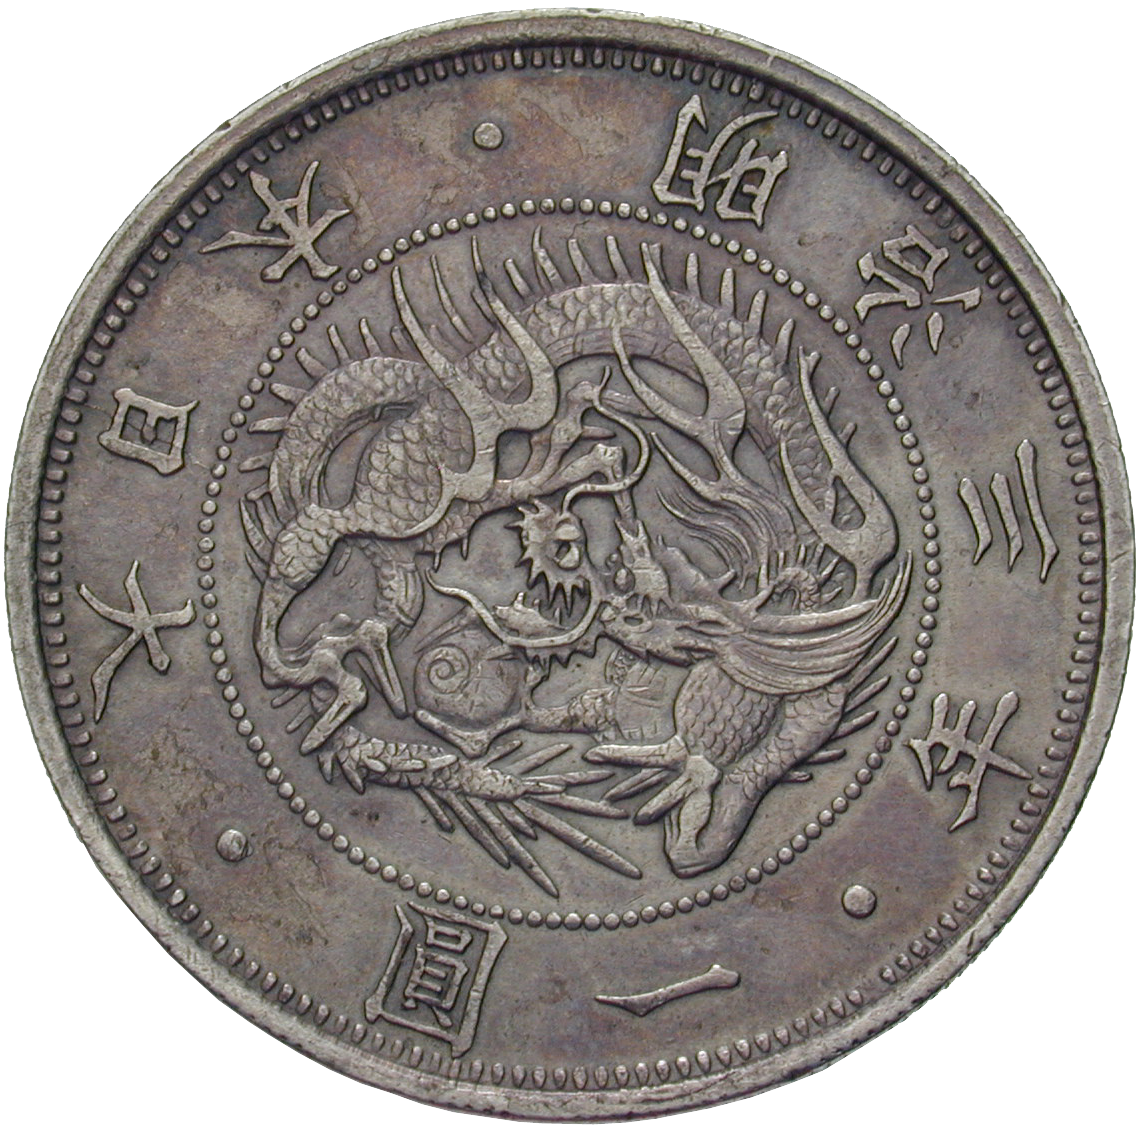 Japanese Empire, Meiji Period, Mutsuhito, Yen 1870 (obverse)